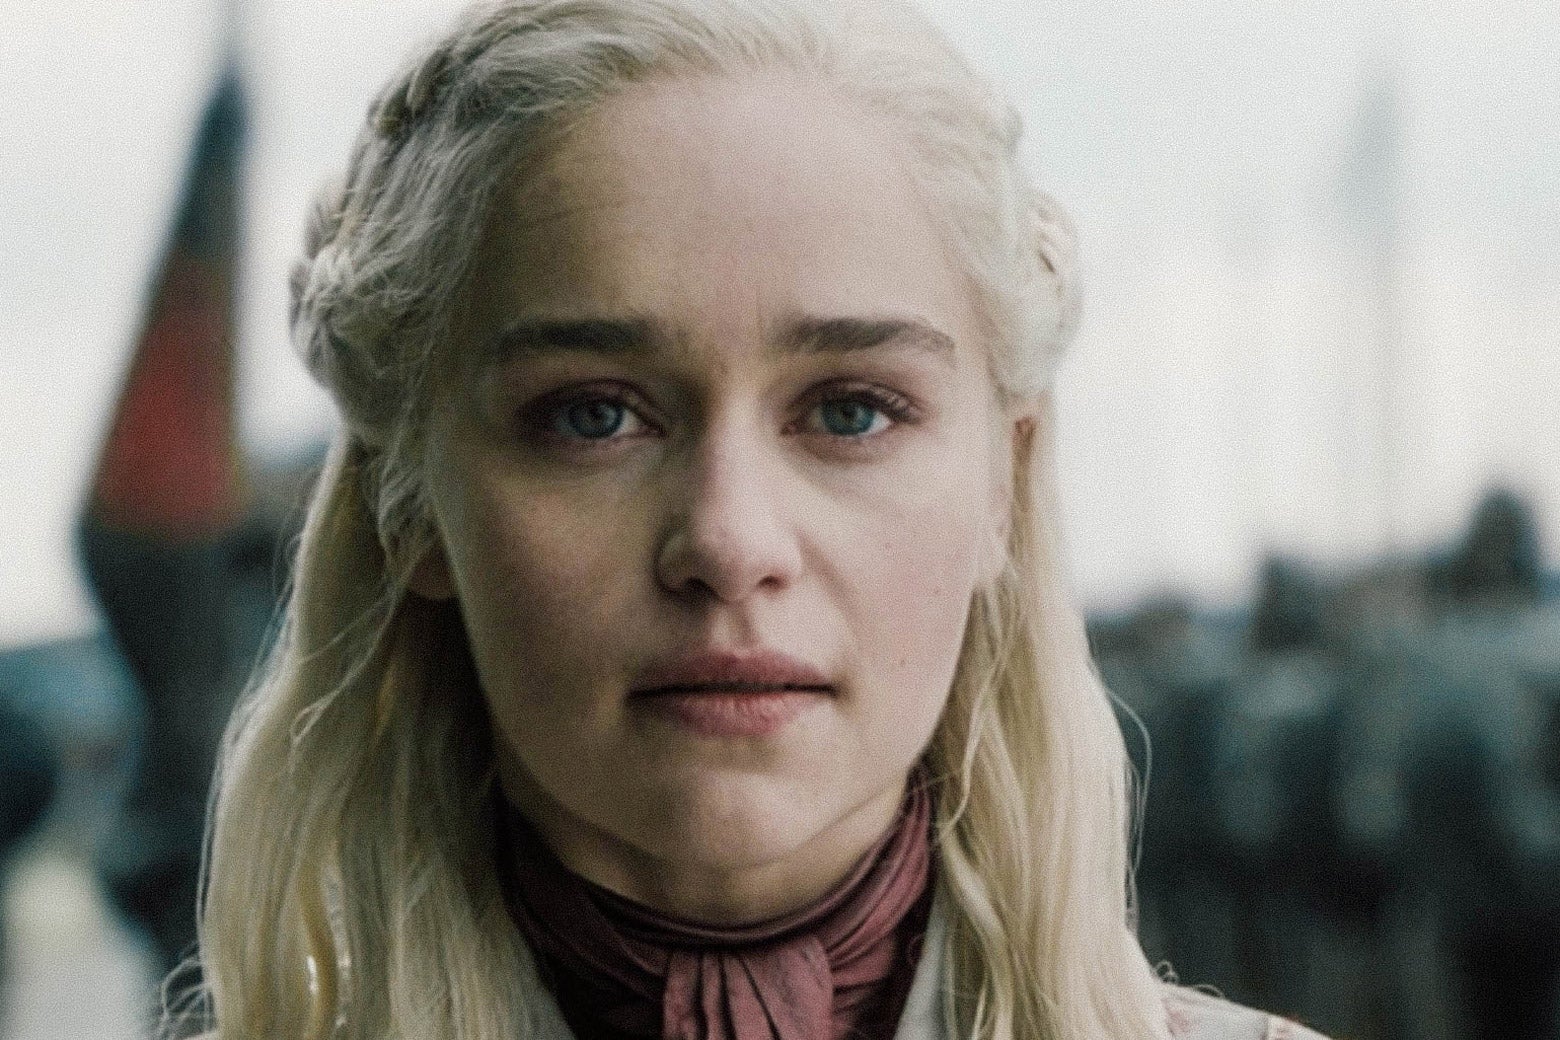 Daenerys Targaryen in the final scene of "The Last of the Starks."